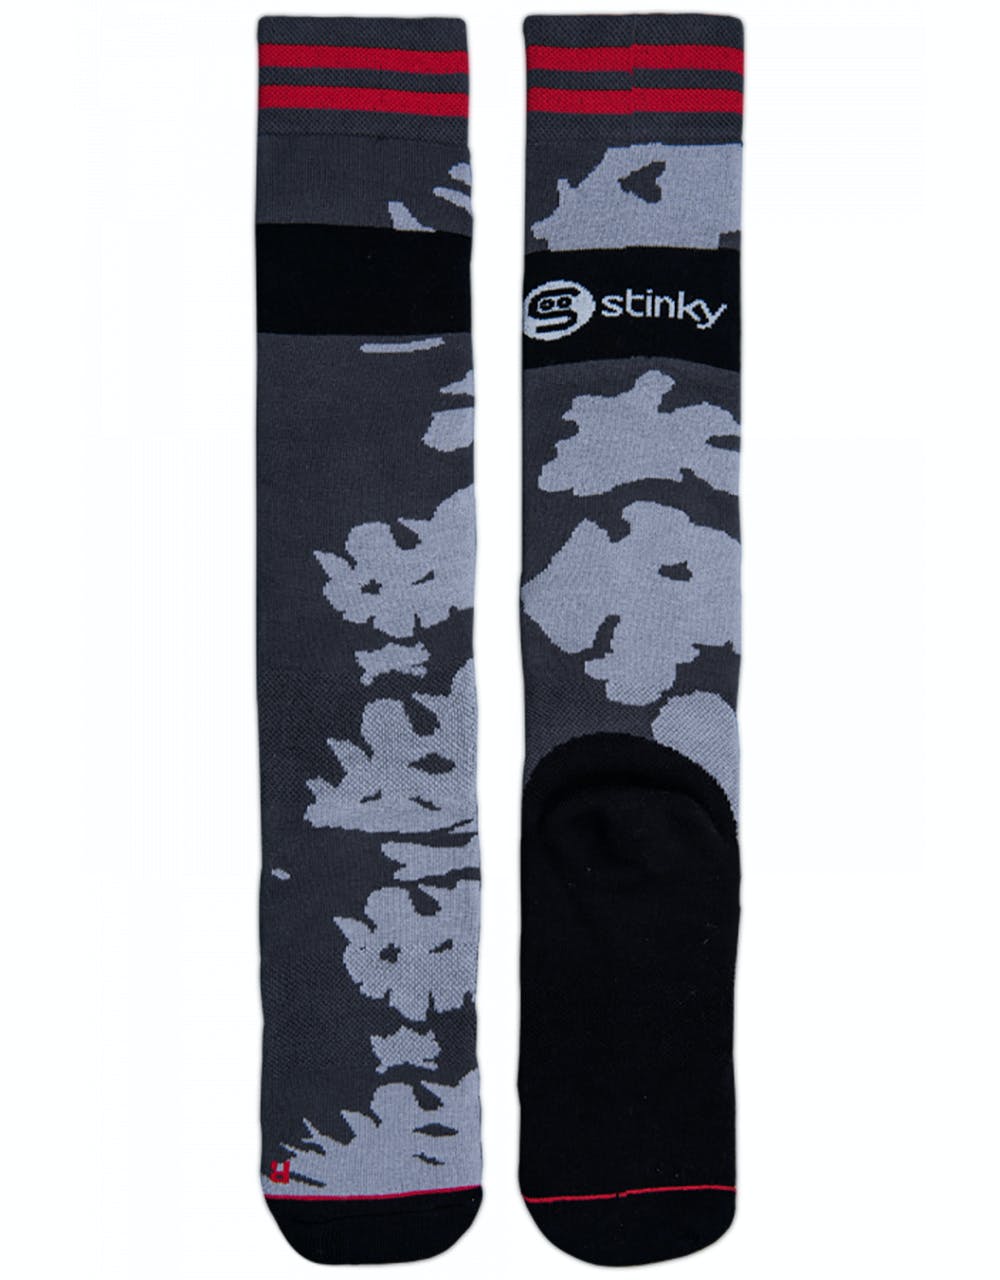 Stinky Moon Snowboard Socks - Black/Moon